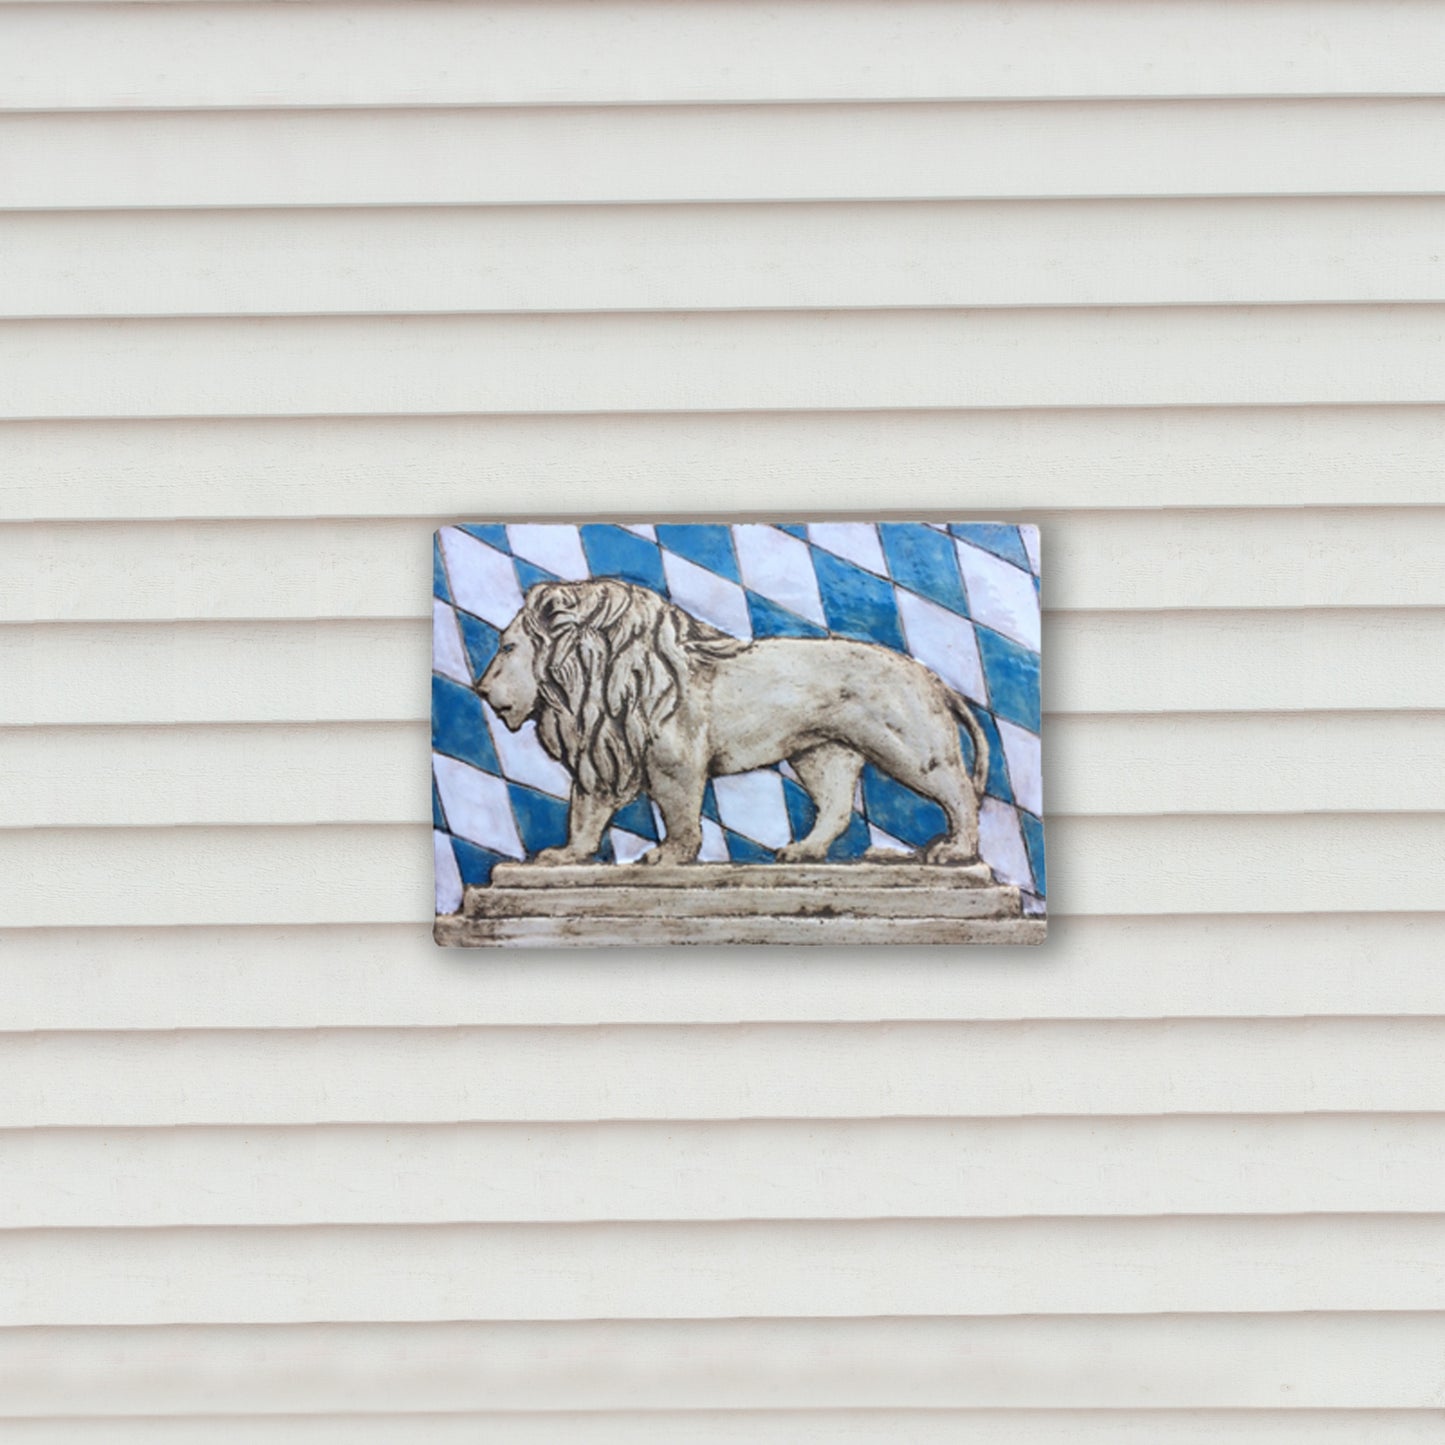 Bavarian lion, painted with ceramic glazes